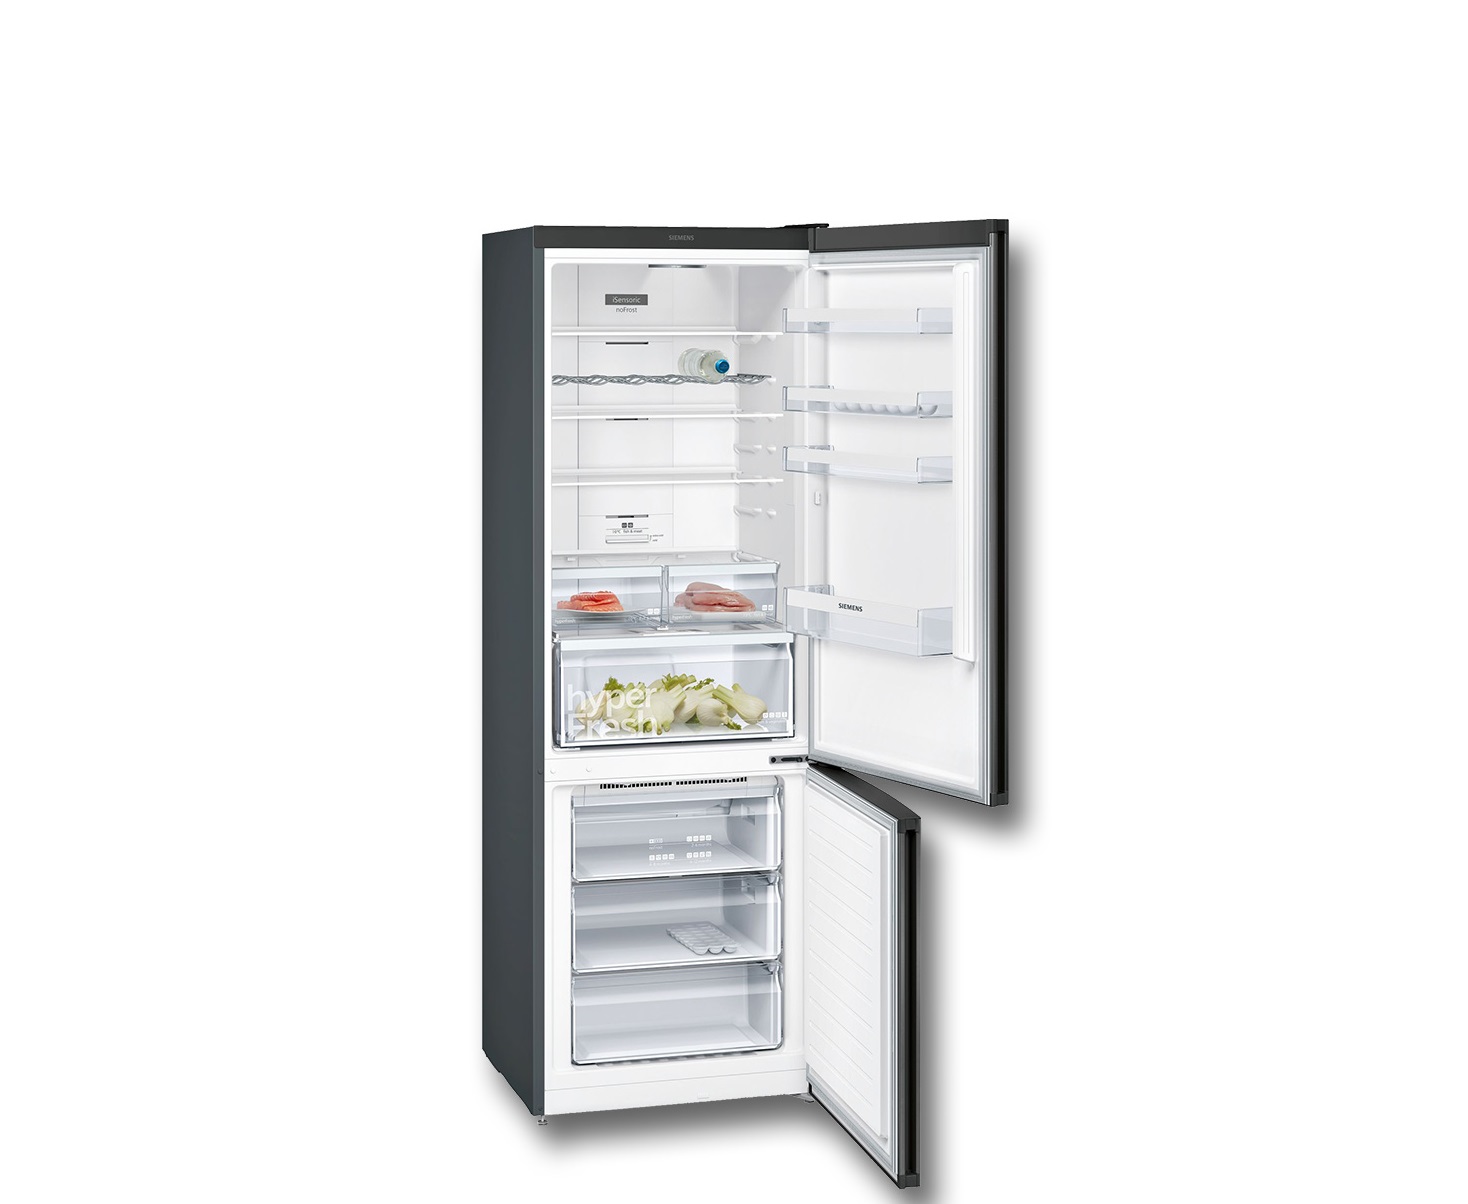 Siemens Blacksteel refrigerator